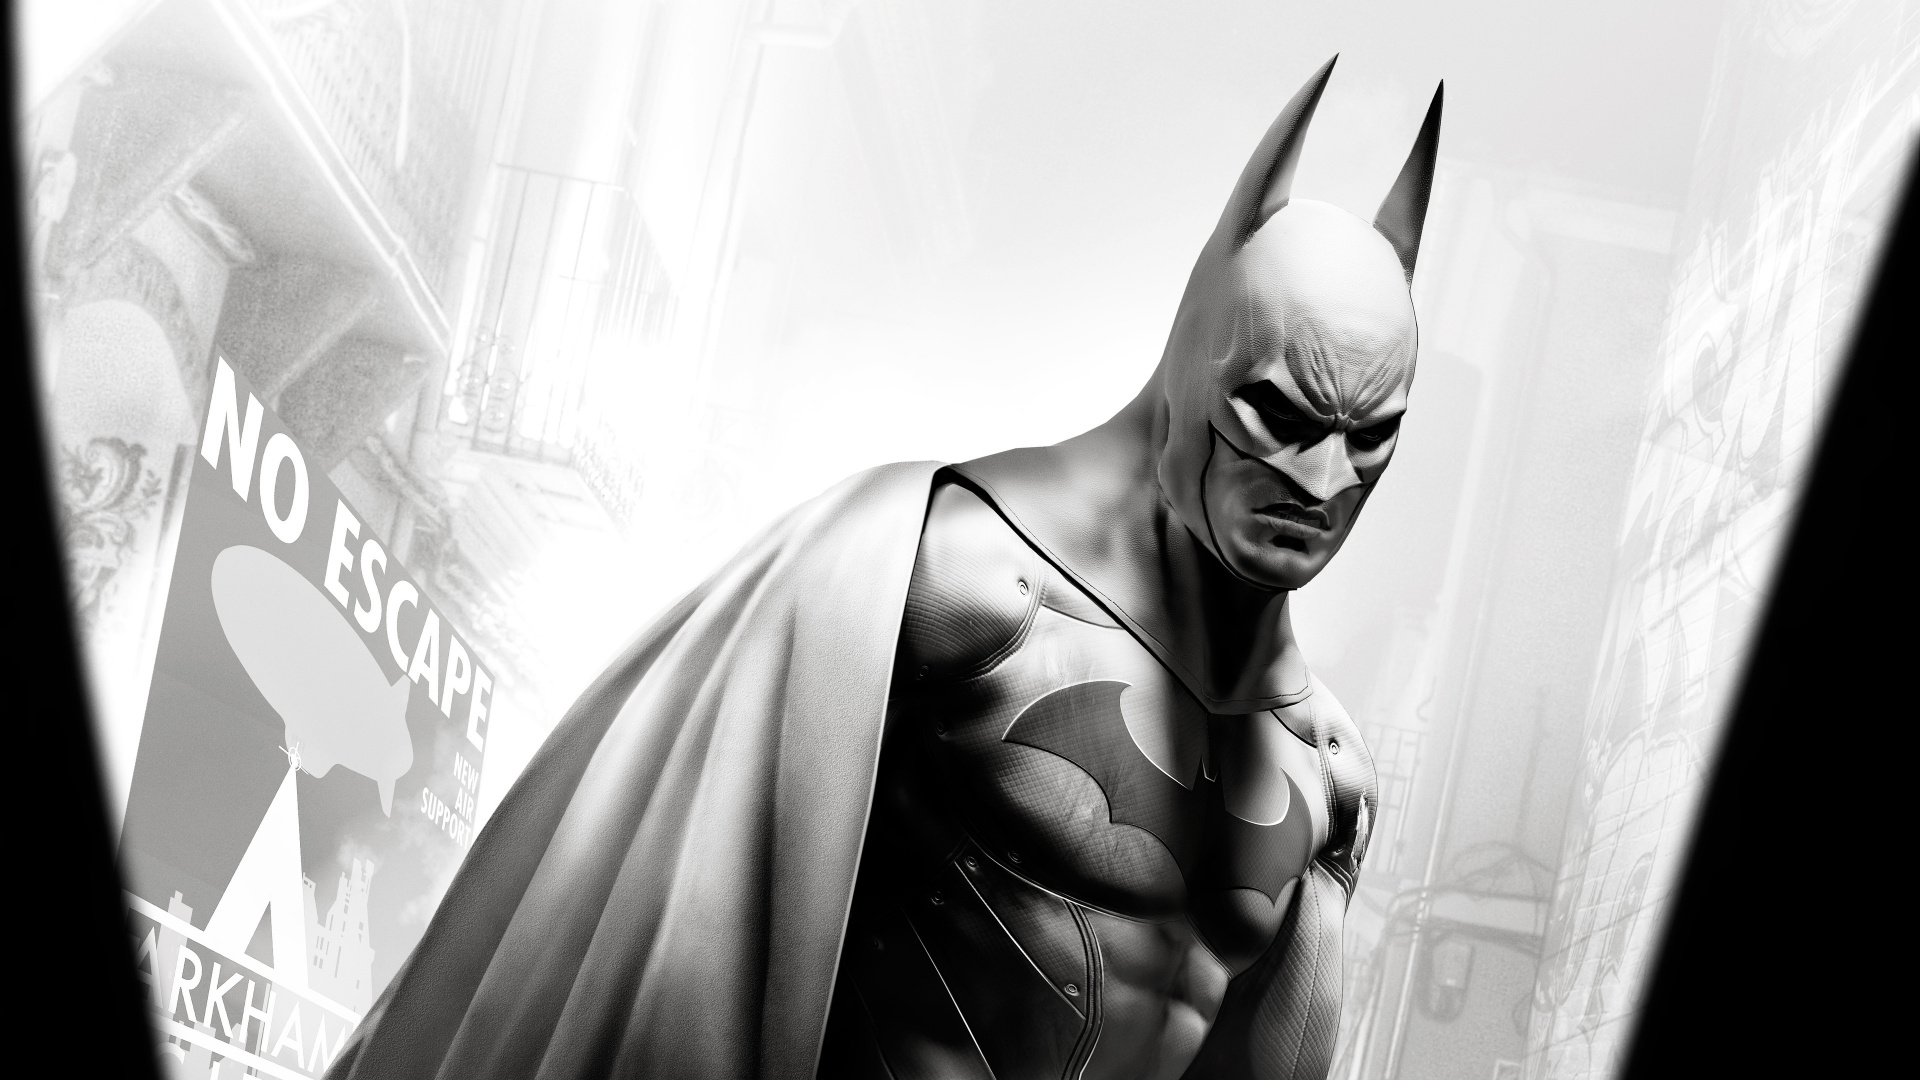 Batman Arkham Knight Full HD, HDTV, 1080p 16:9 Wallpapers, HD Batman Arkham  Knight 1920x1080 Backgrounds, Free Images Download